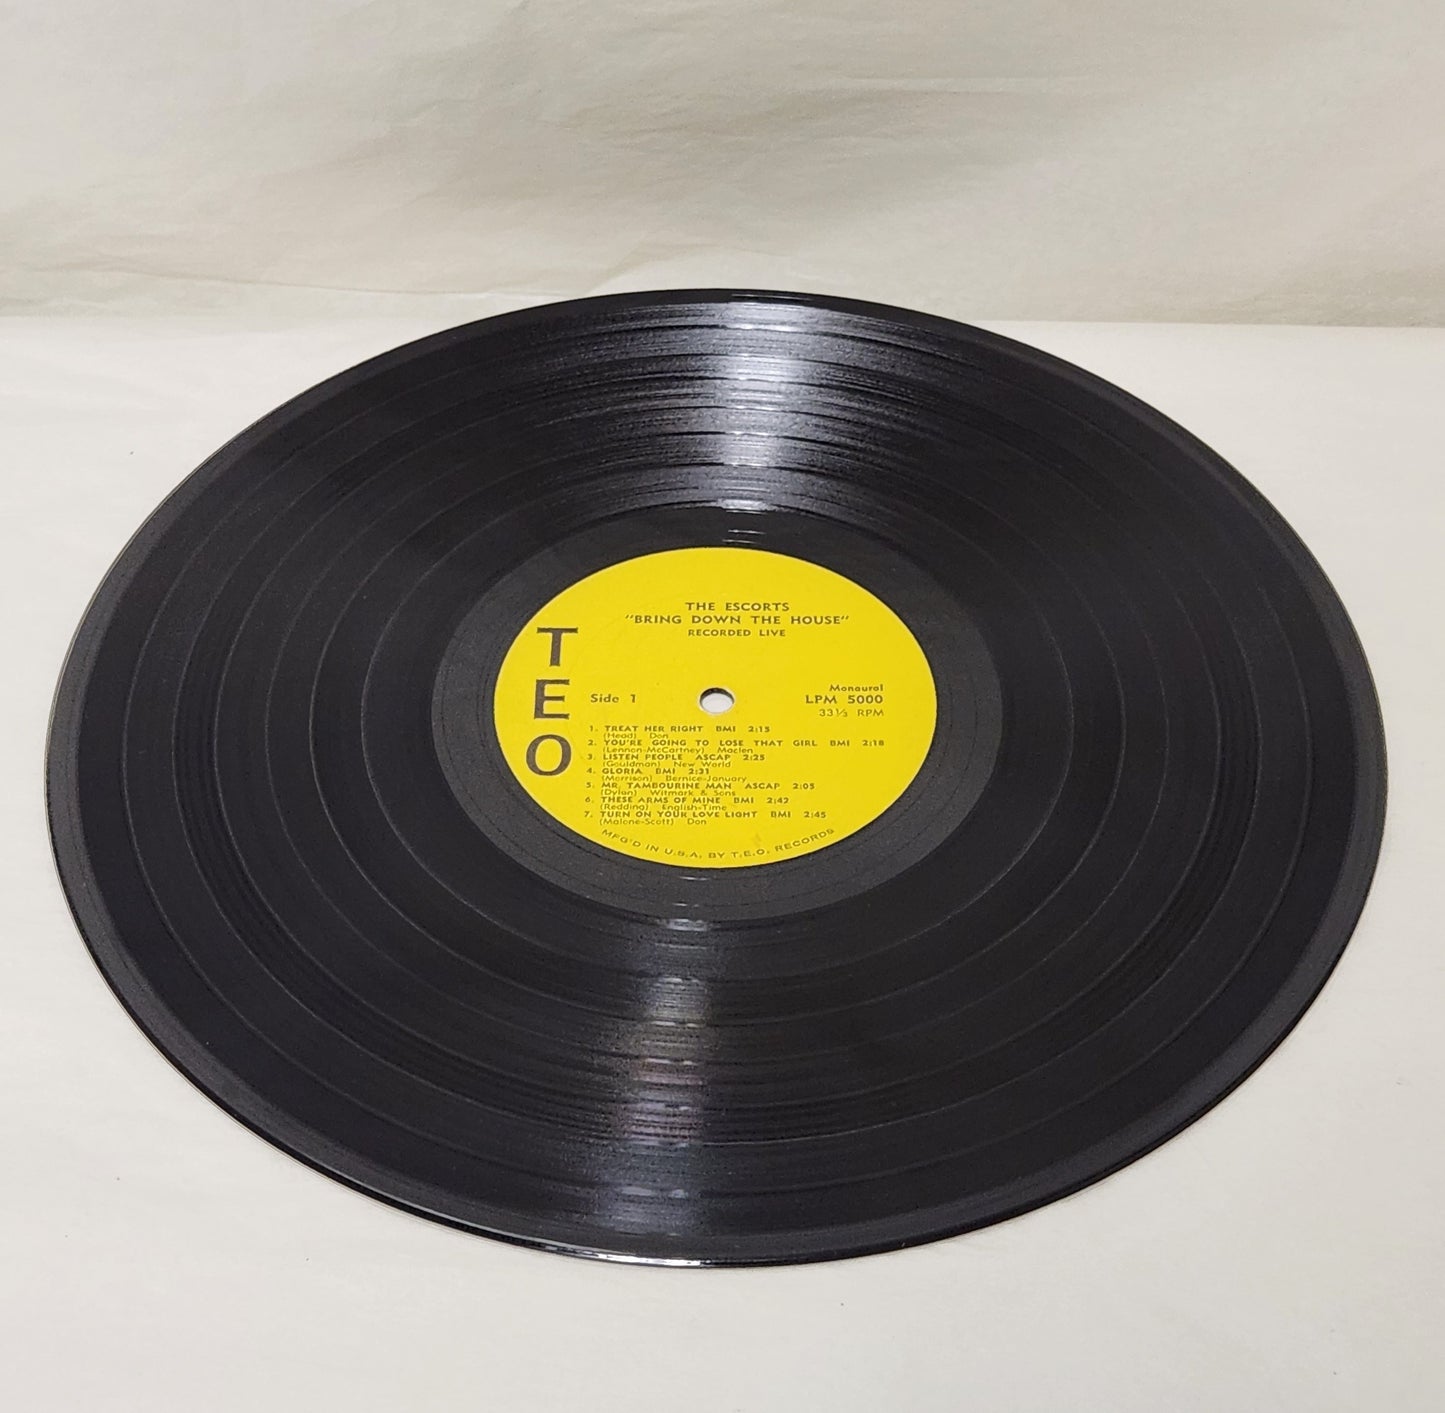 The Escorts "Bring Down The House" 1966 Garage Rock Record Album